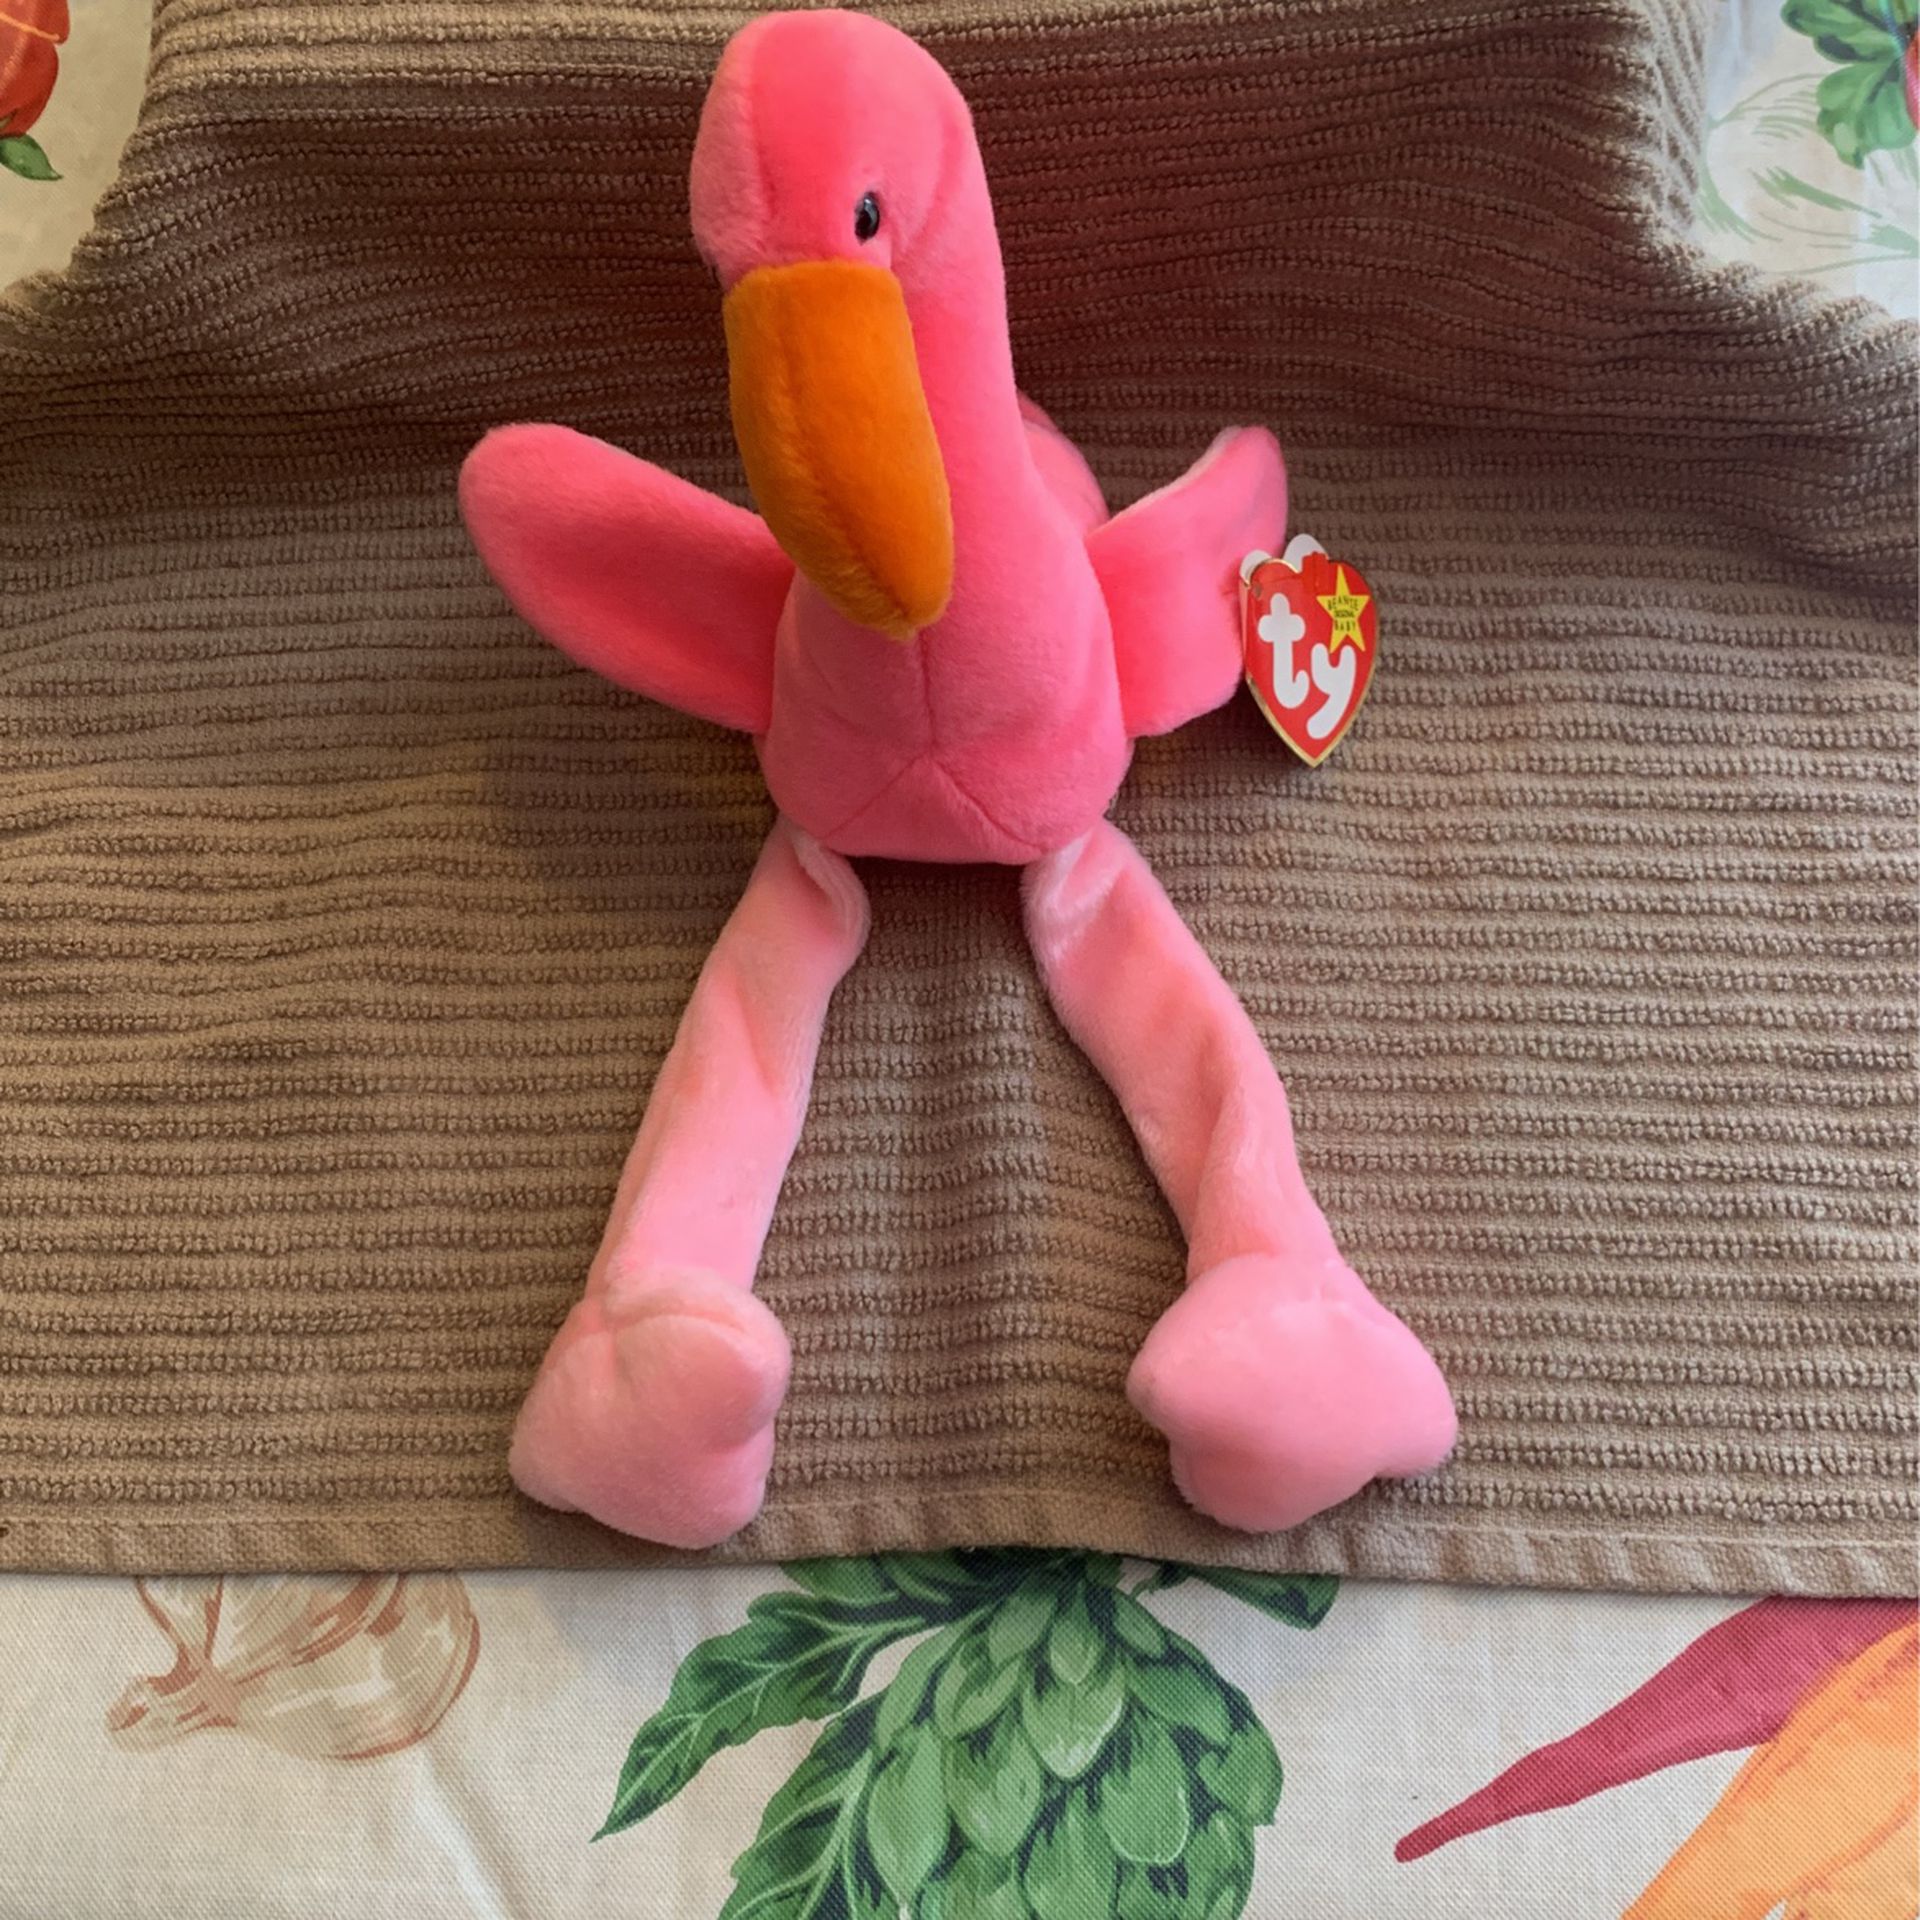 Ty Beanie Babies “Pinky” The Flamingo